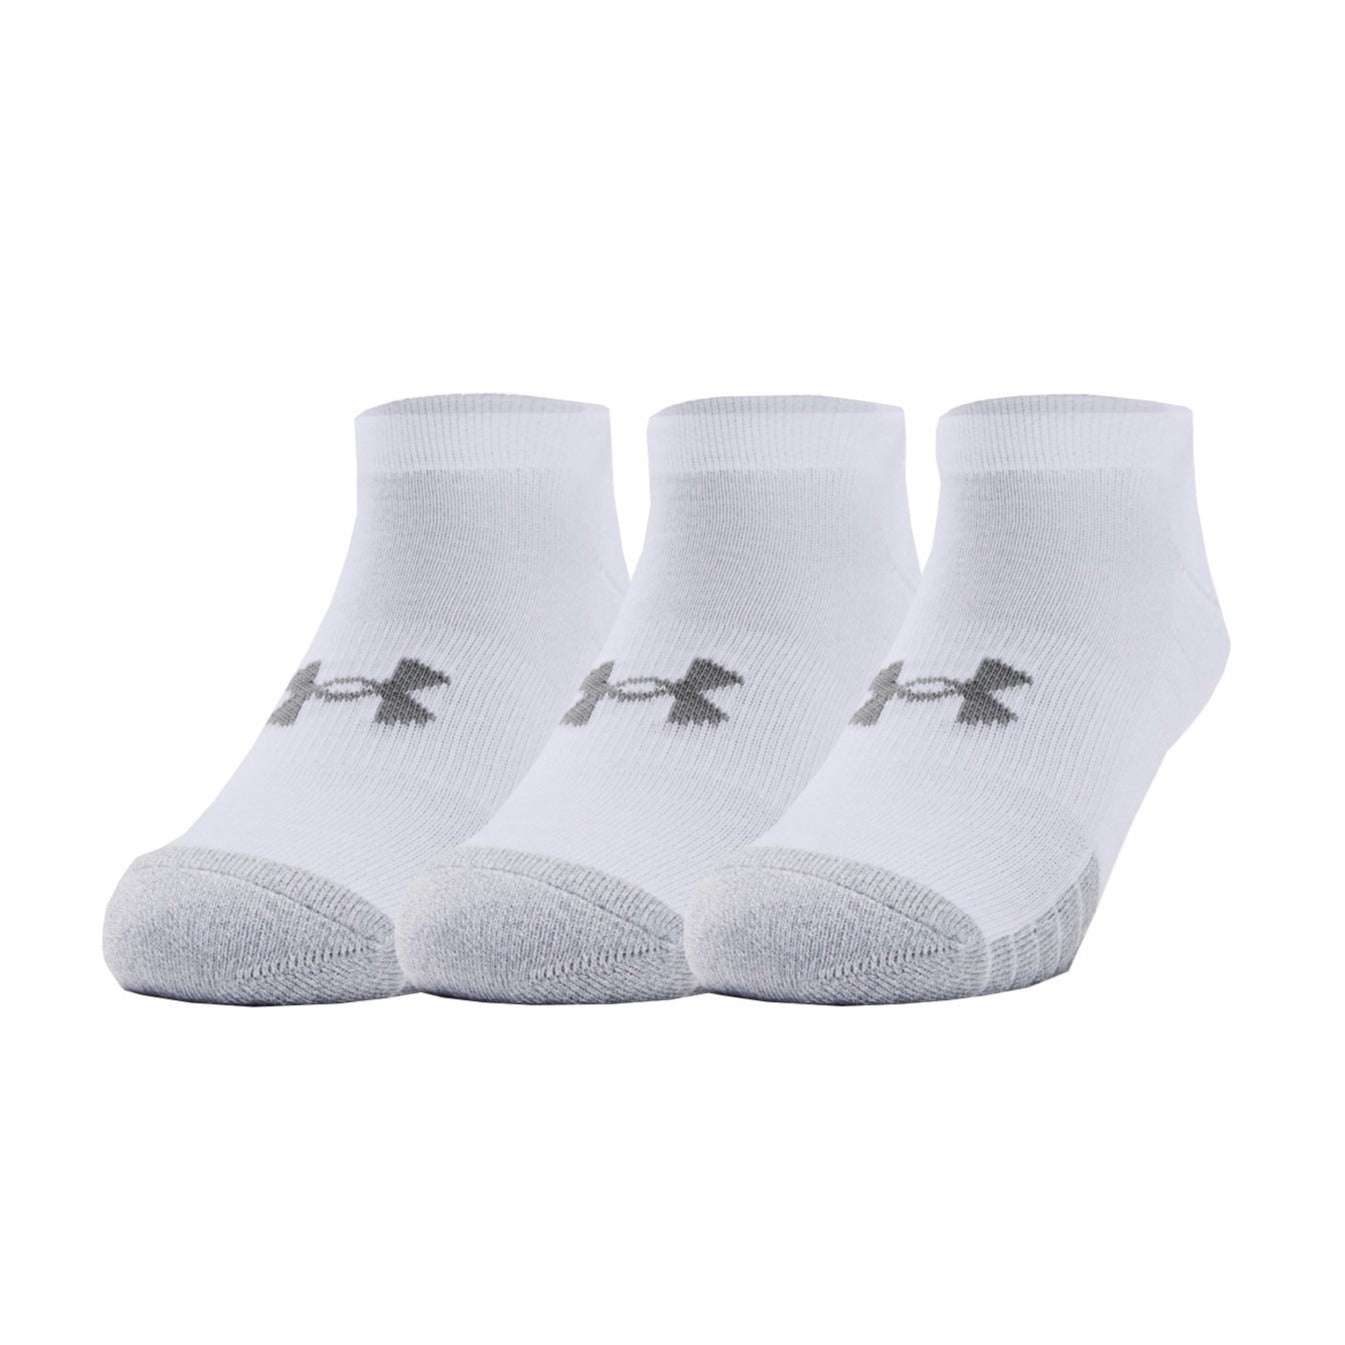 Under Armour HeatGear Ankle Socks White